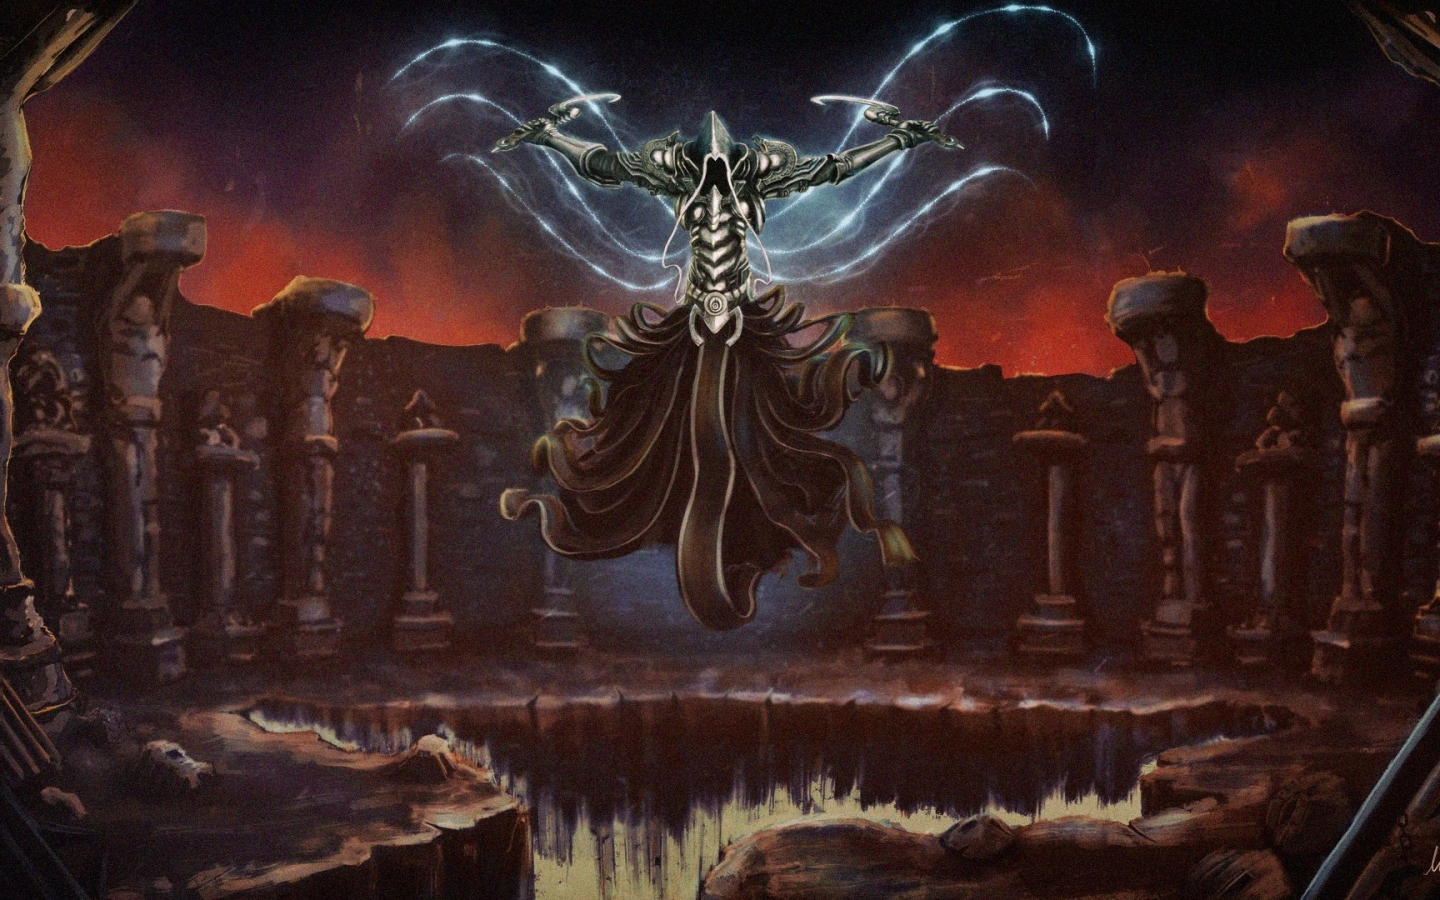 Download 1440x900 Wallpaper Monster Malthael Diablo Iii Game Images, Photos, Reviews